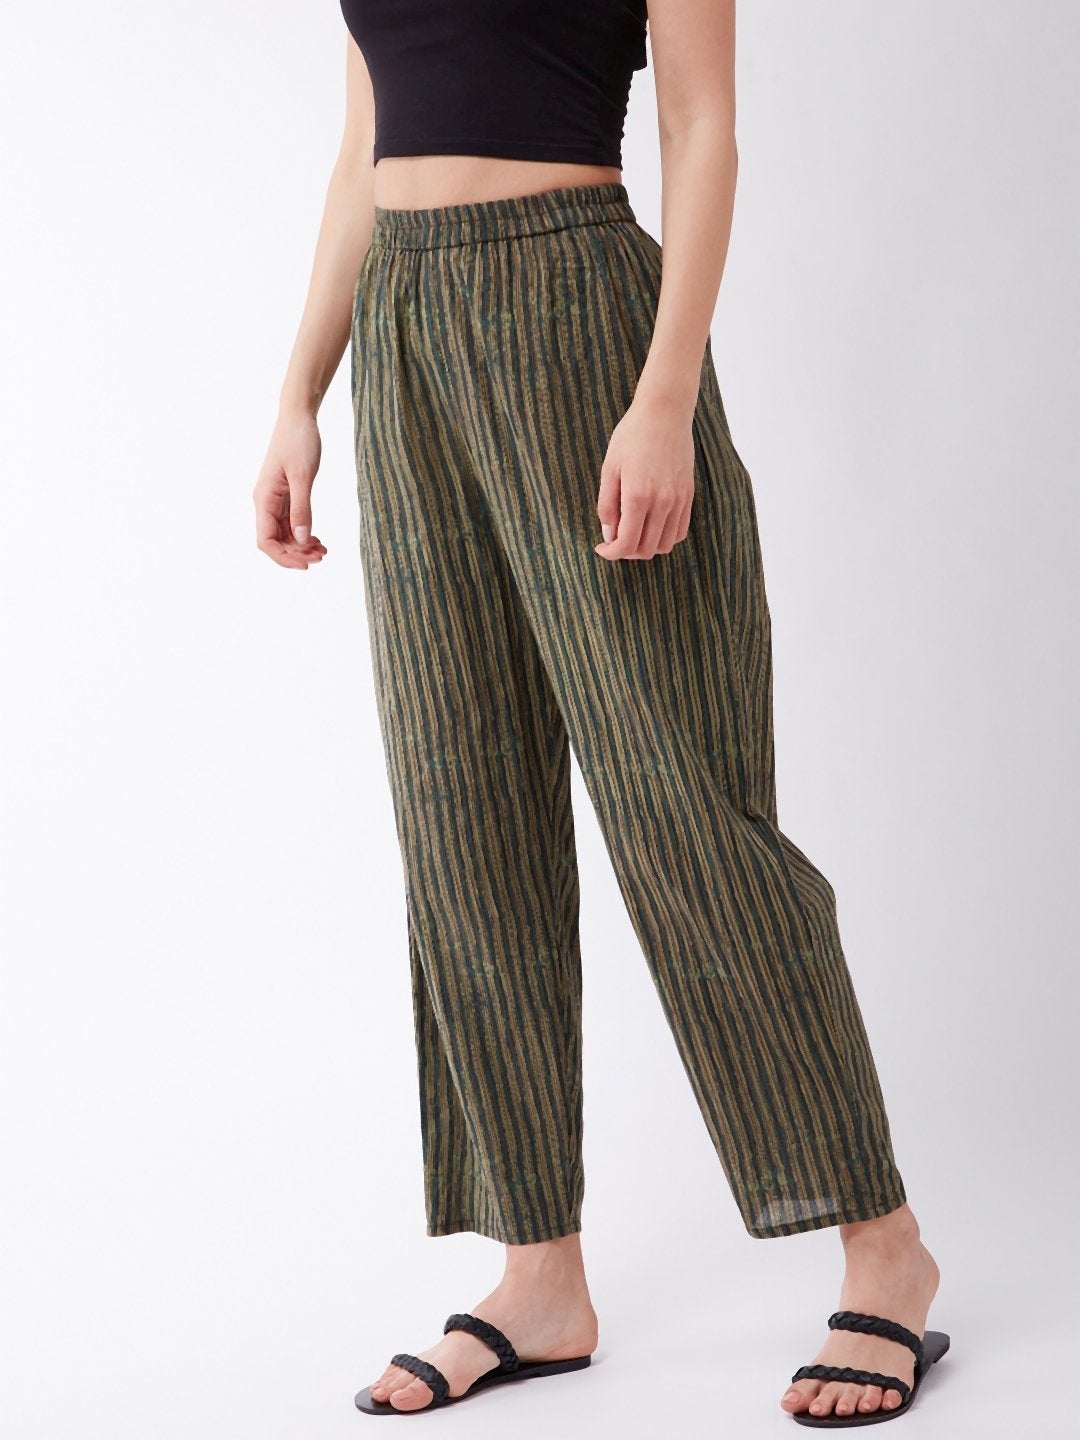 Women's Dark Green Striped Pant - InWeave